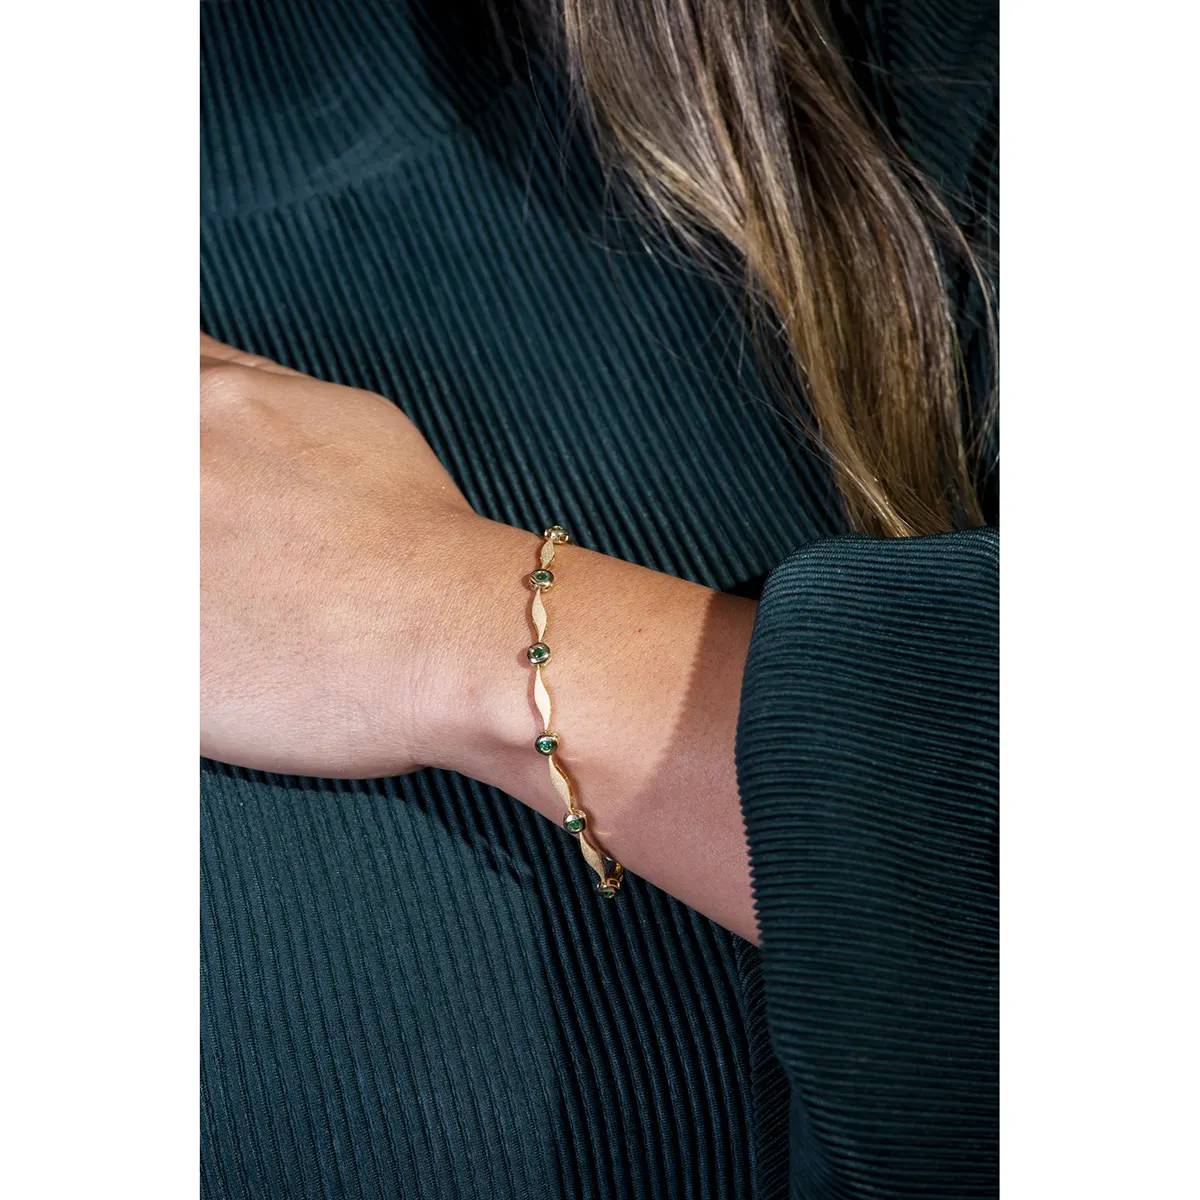 18K_yellow_gold_emerald_bracelet_round_natural_Colombian_emeralds.webp